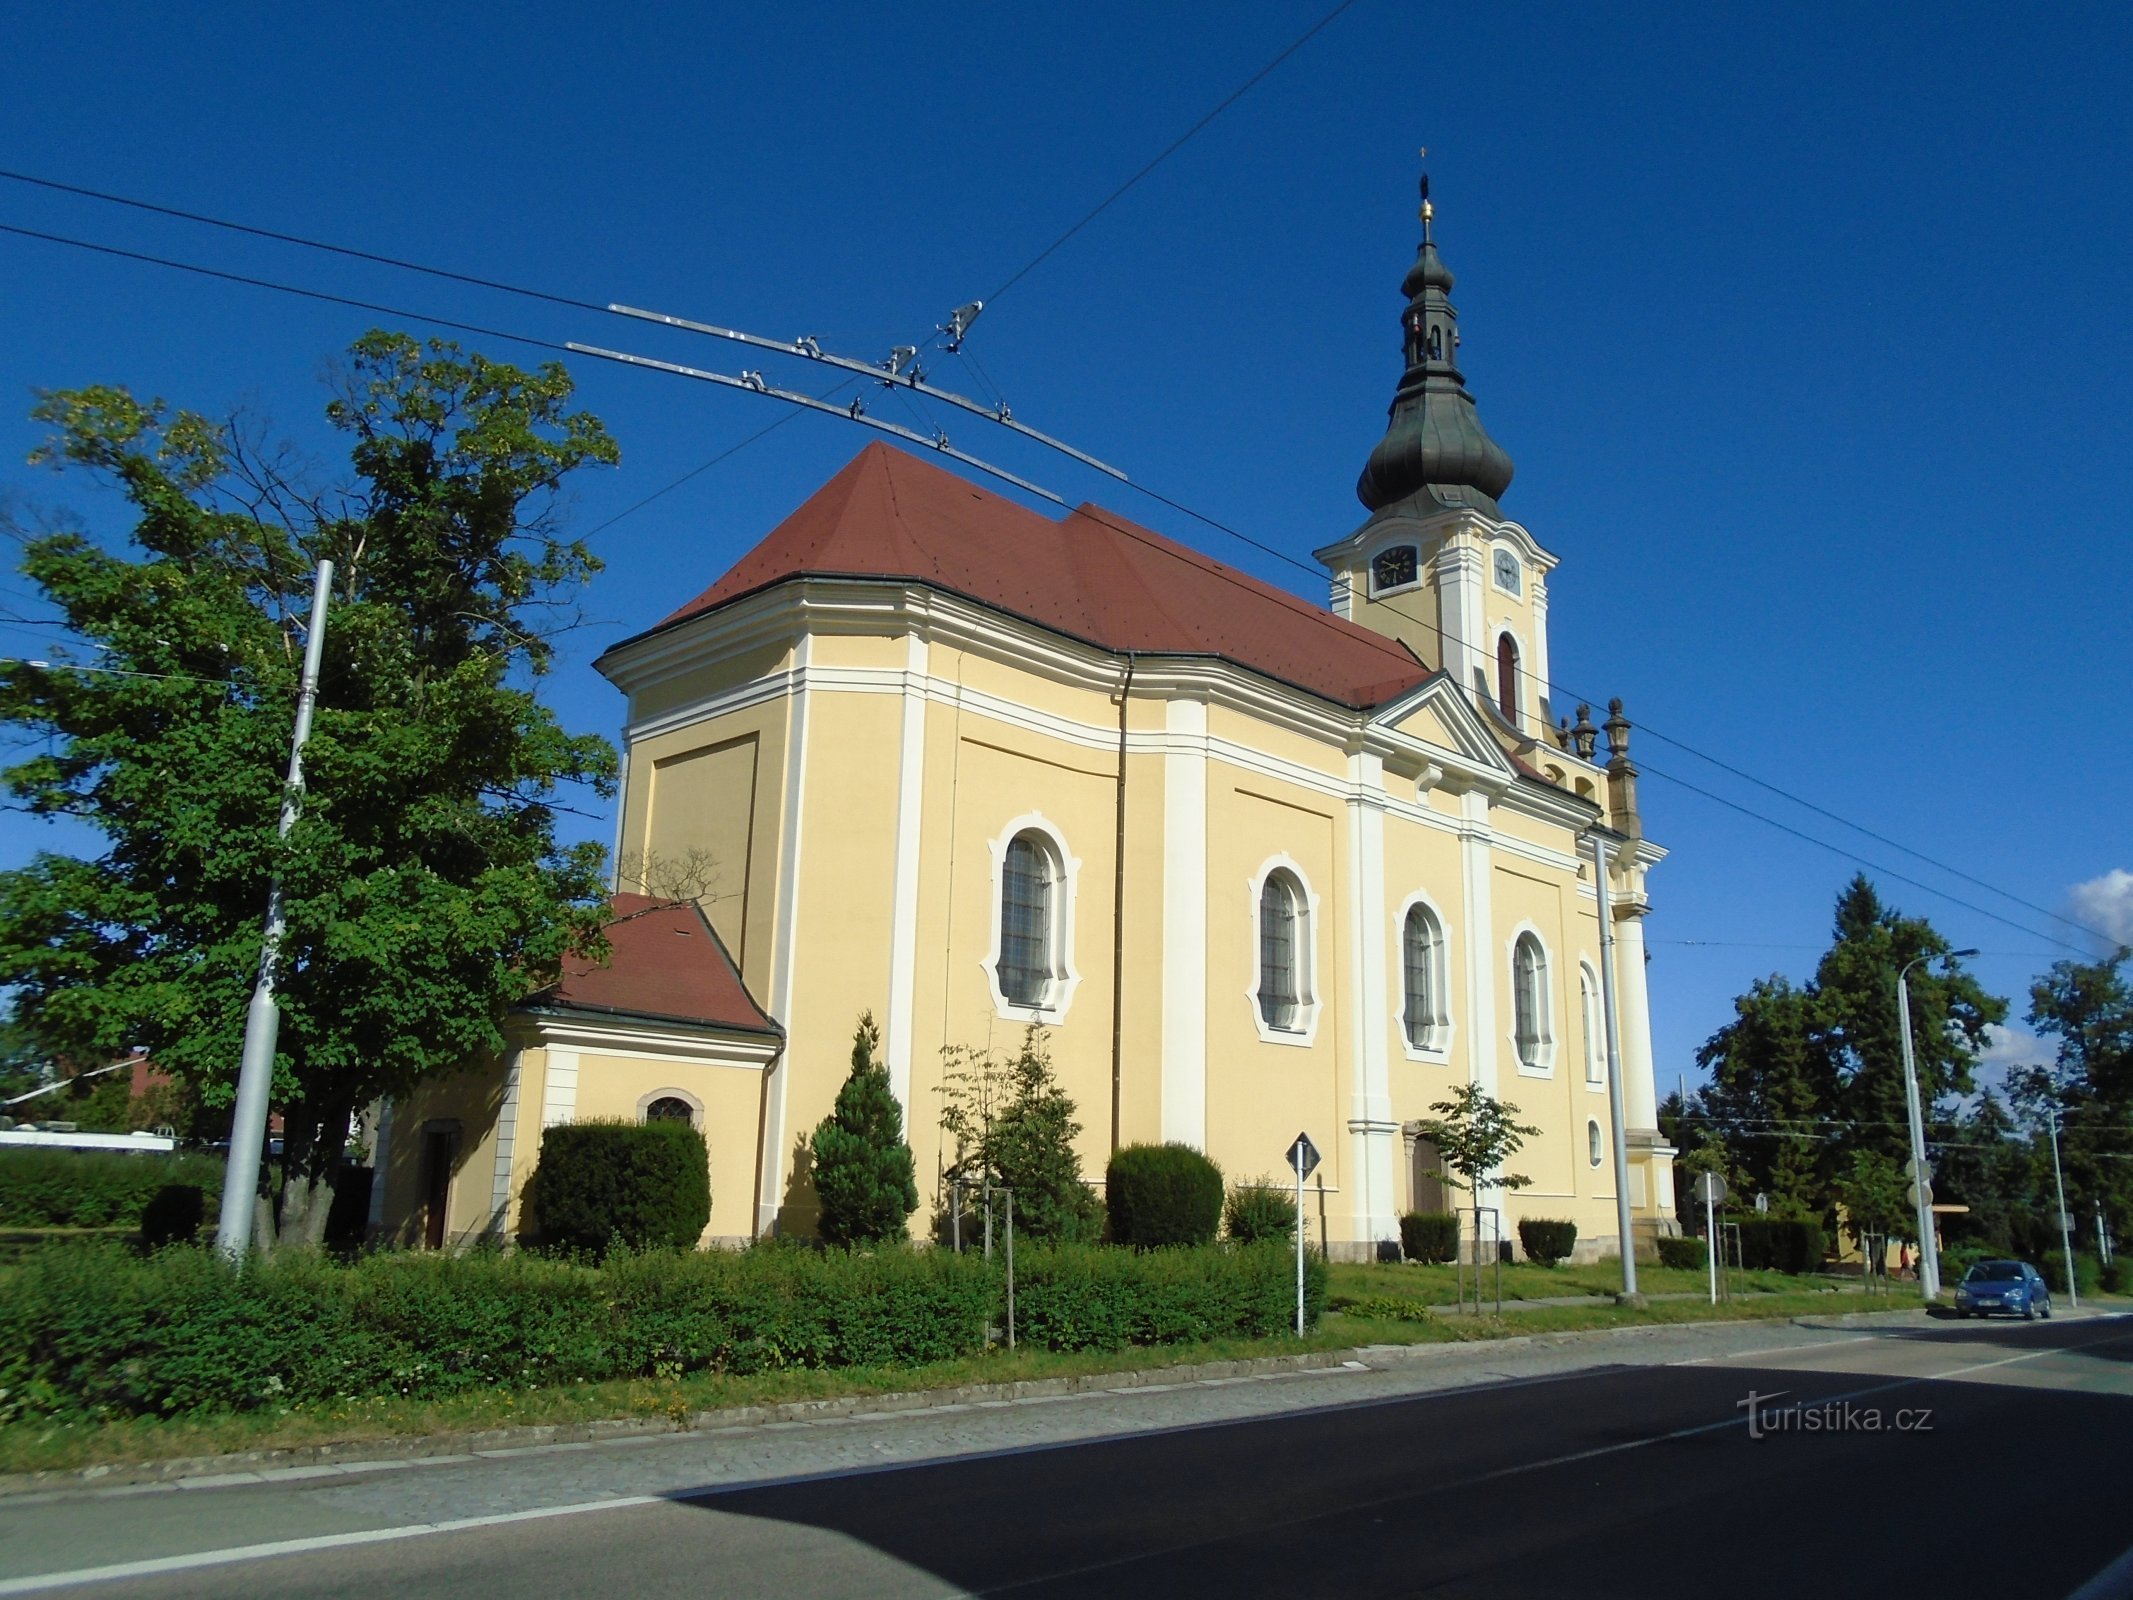 Chiesa di S. Antonina, Hradec Králové, 1.7.2018 luglio XNUMX)